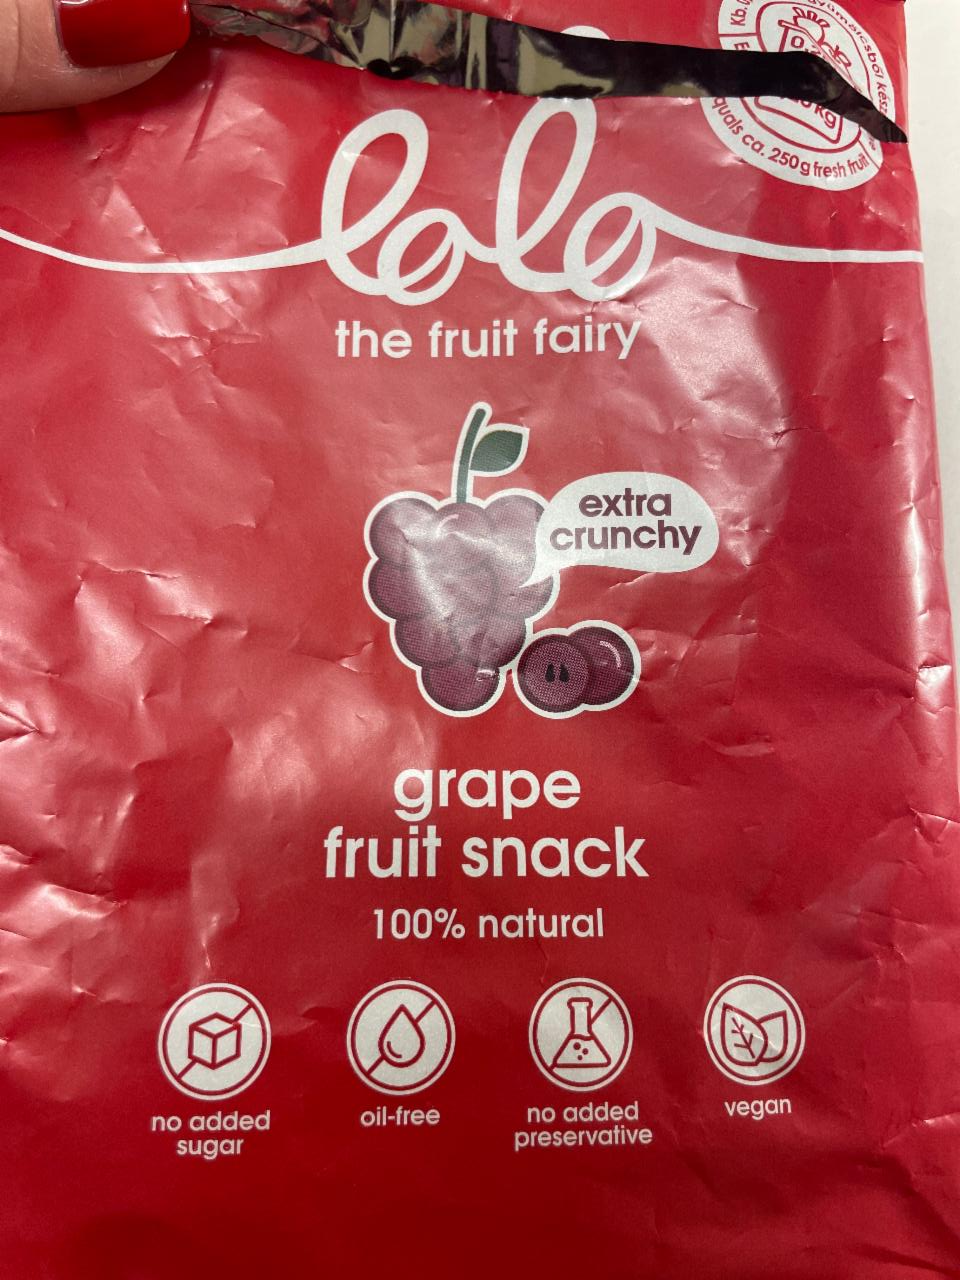 Képek - Grape fruit snack Lolo